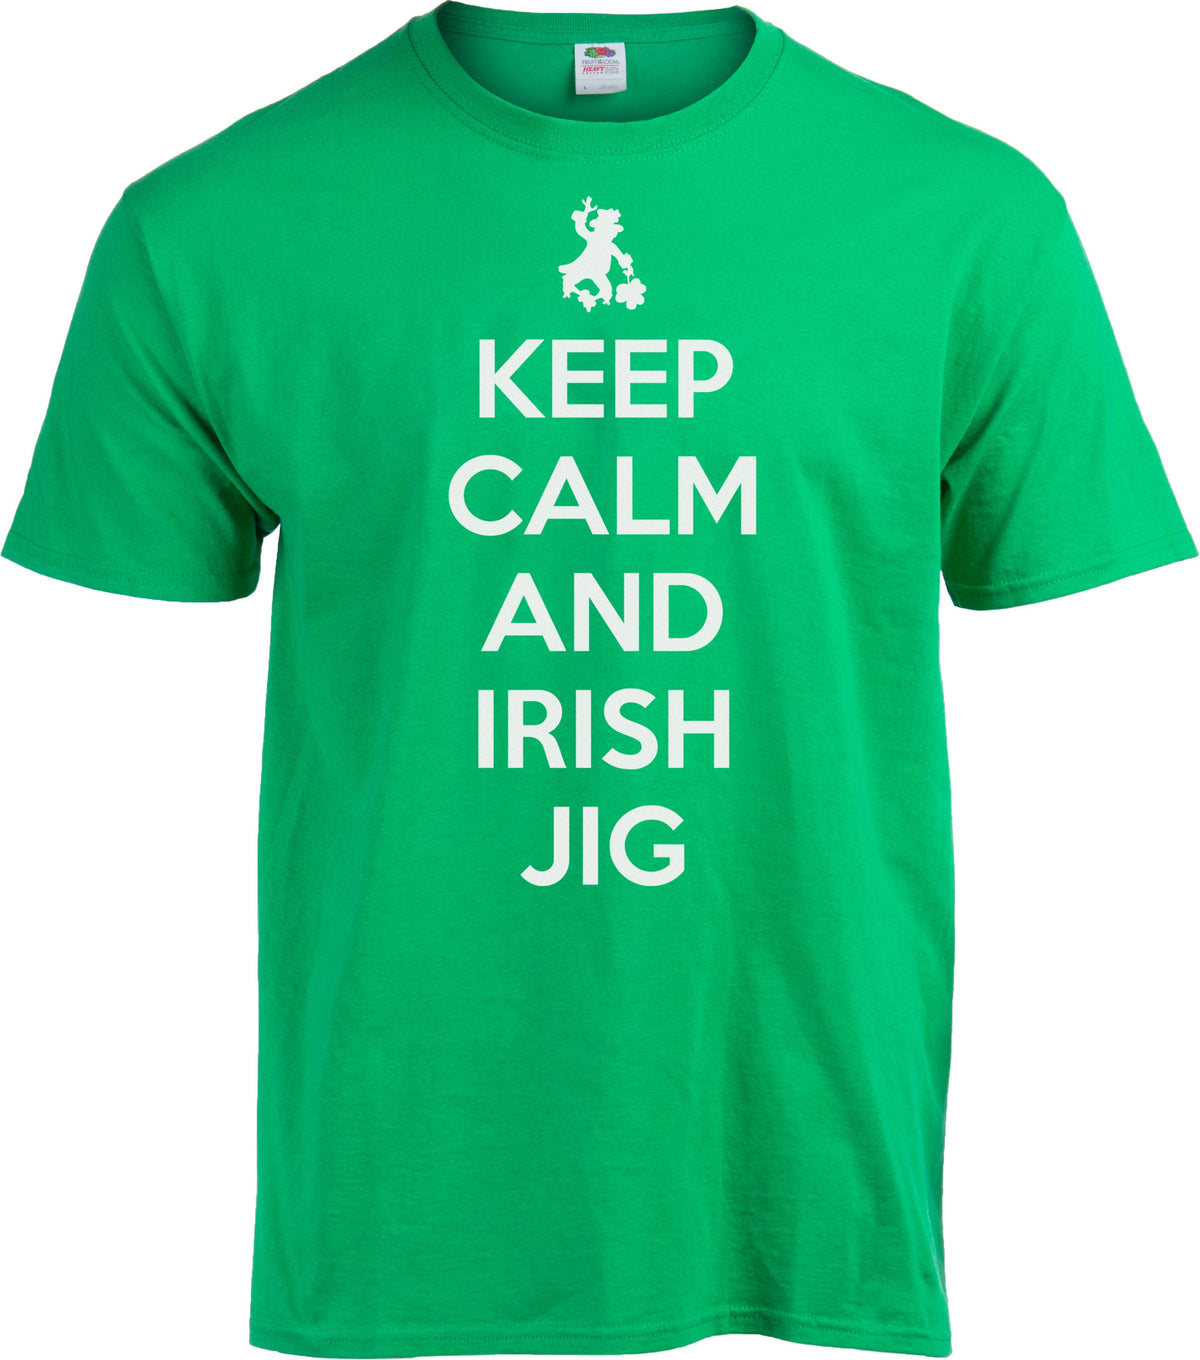 Keep Calm & Irish Jig - St. Patrick's Day Funny Drinking Joke T-shirt - Women's